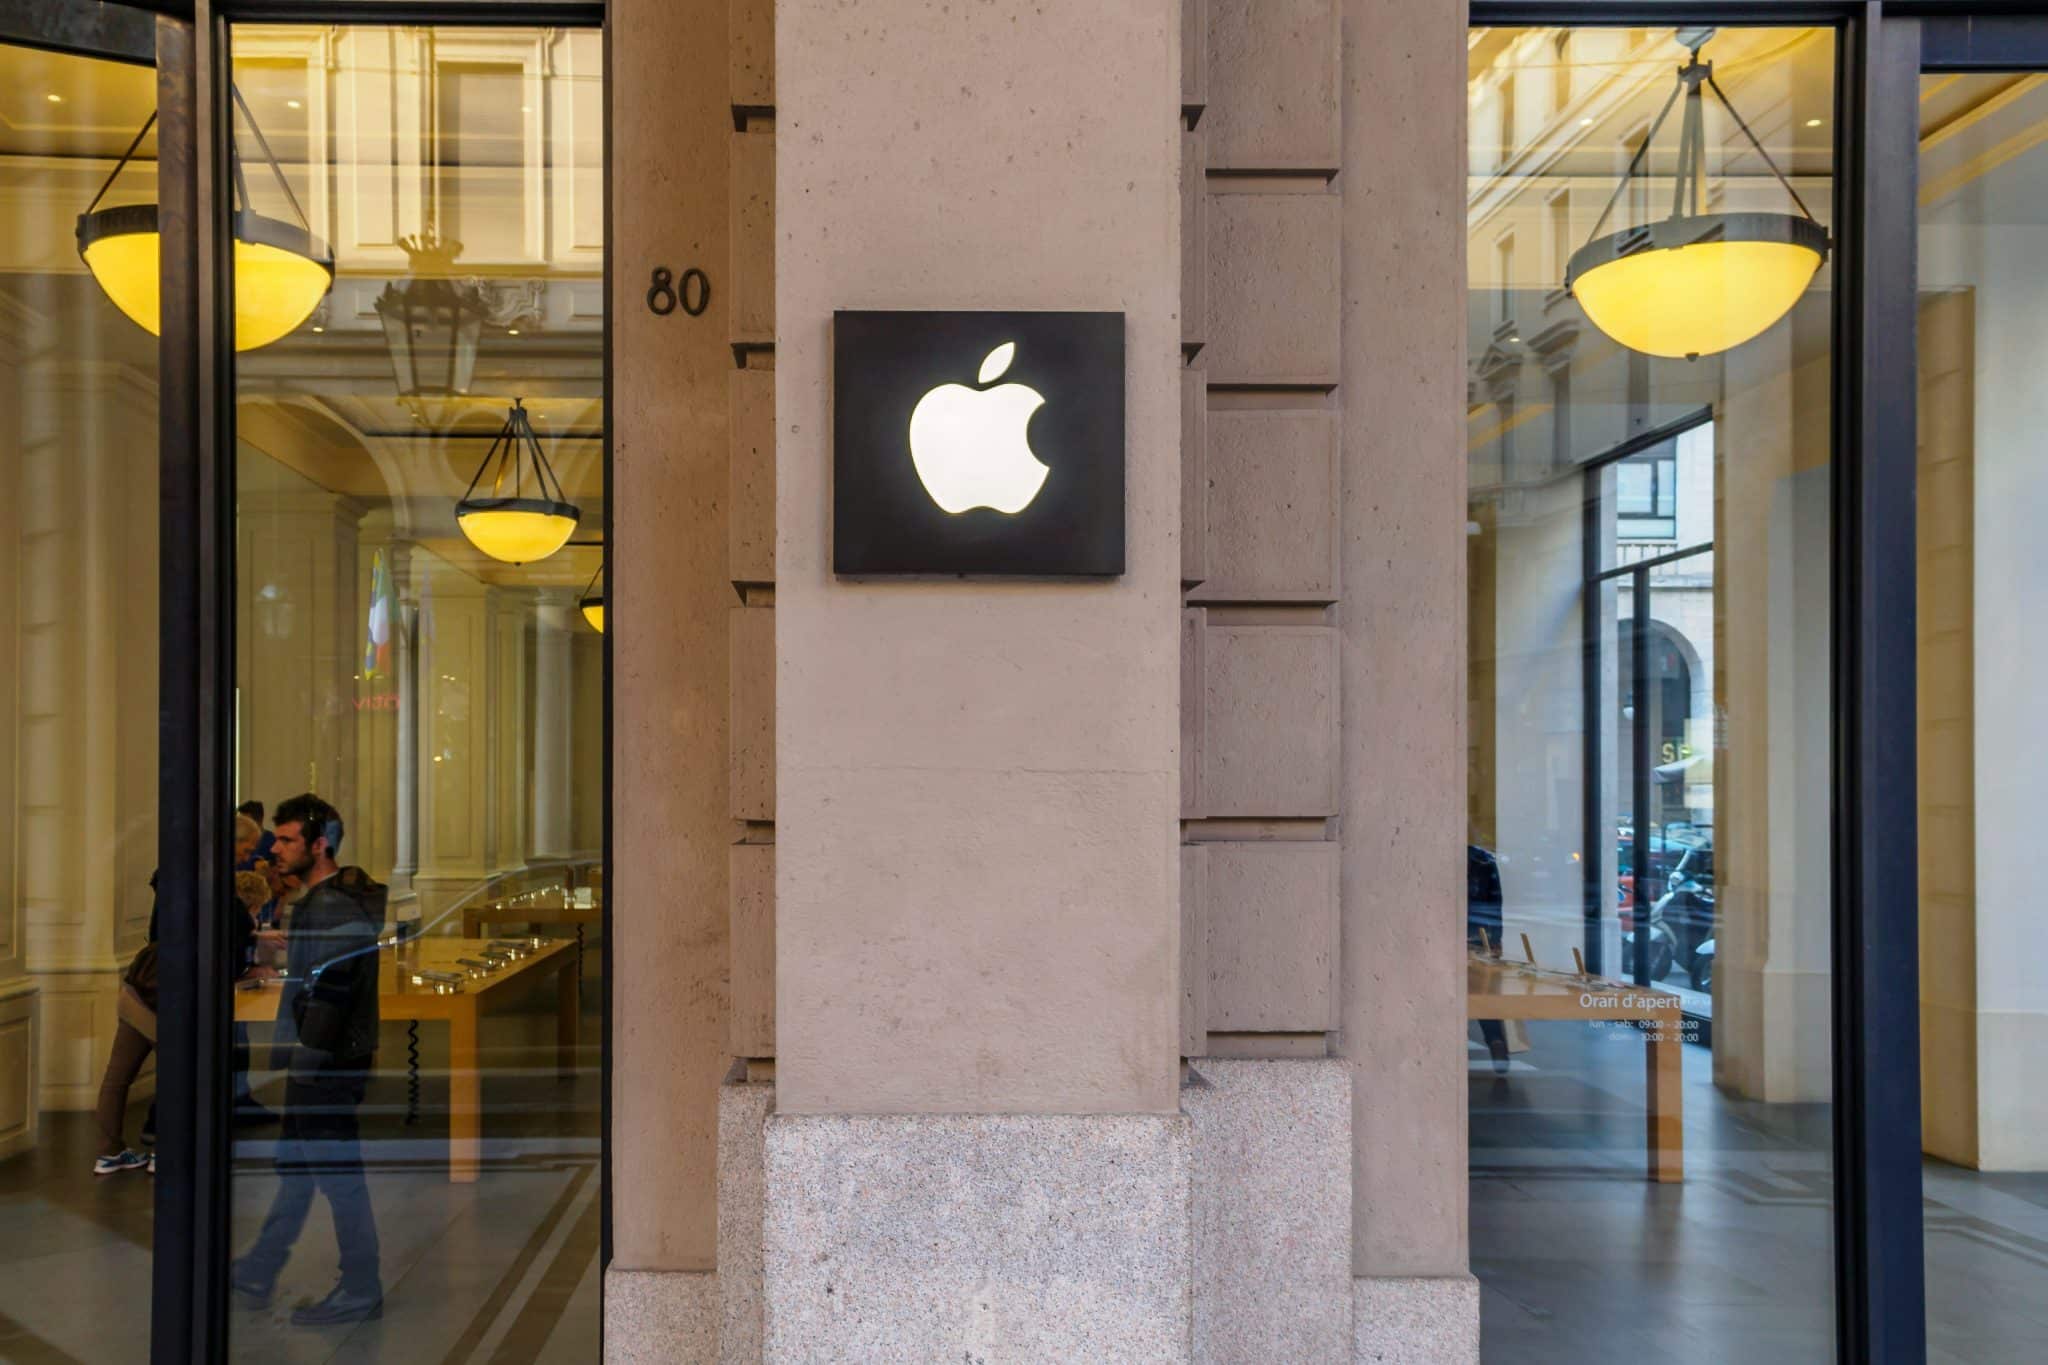 EU Regulators Fine Apple $2 Billion For Breaking Competition Rules